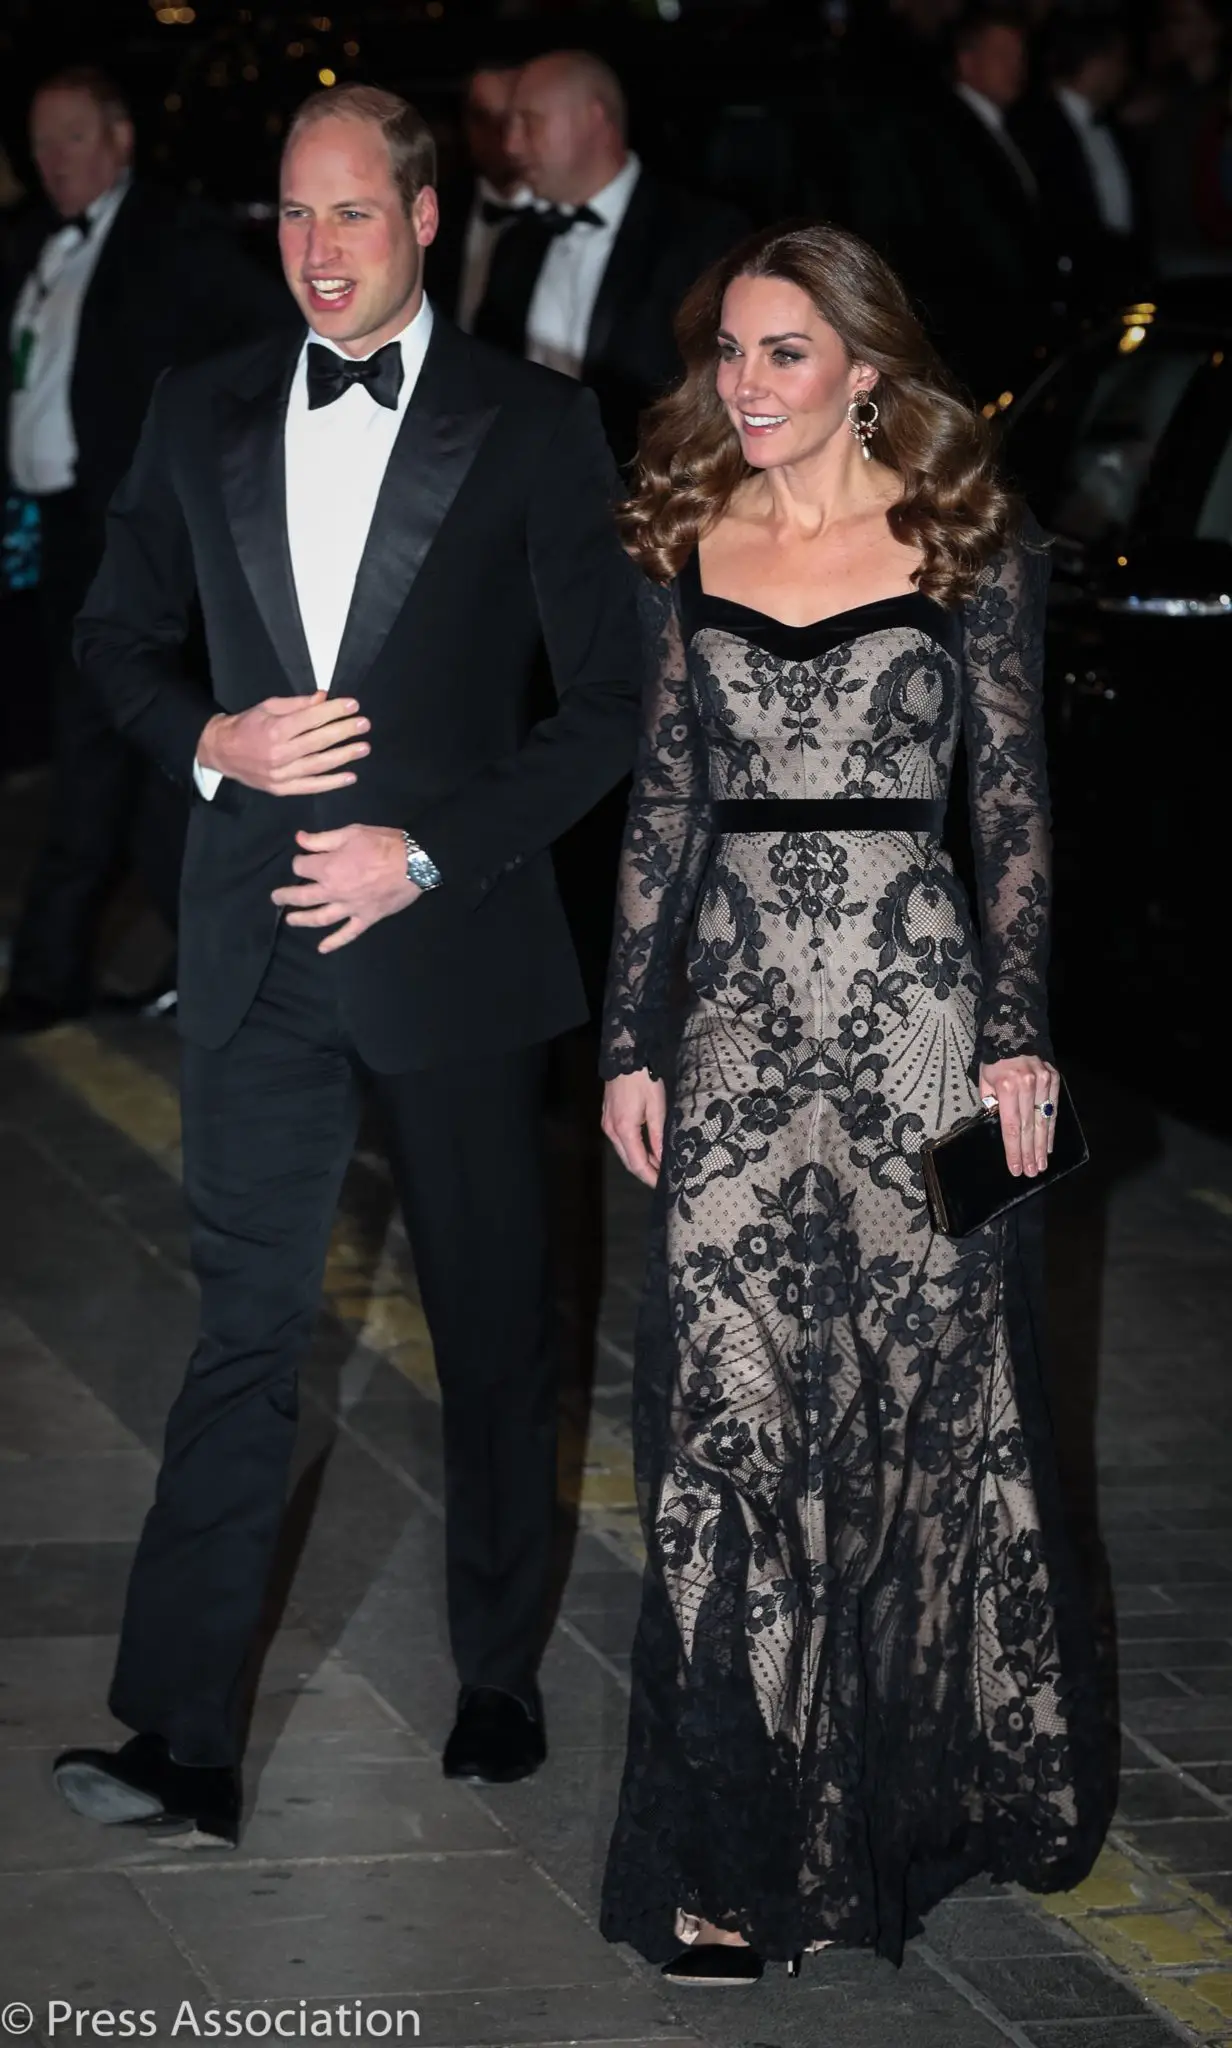 The Prince and Princess of Wales at the 2019 Royal Variety Performance